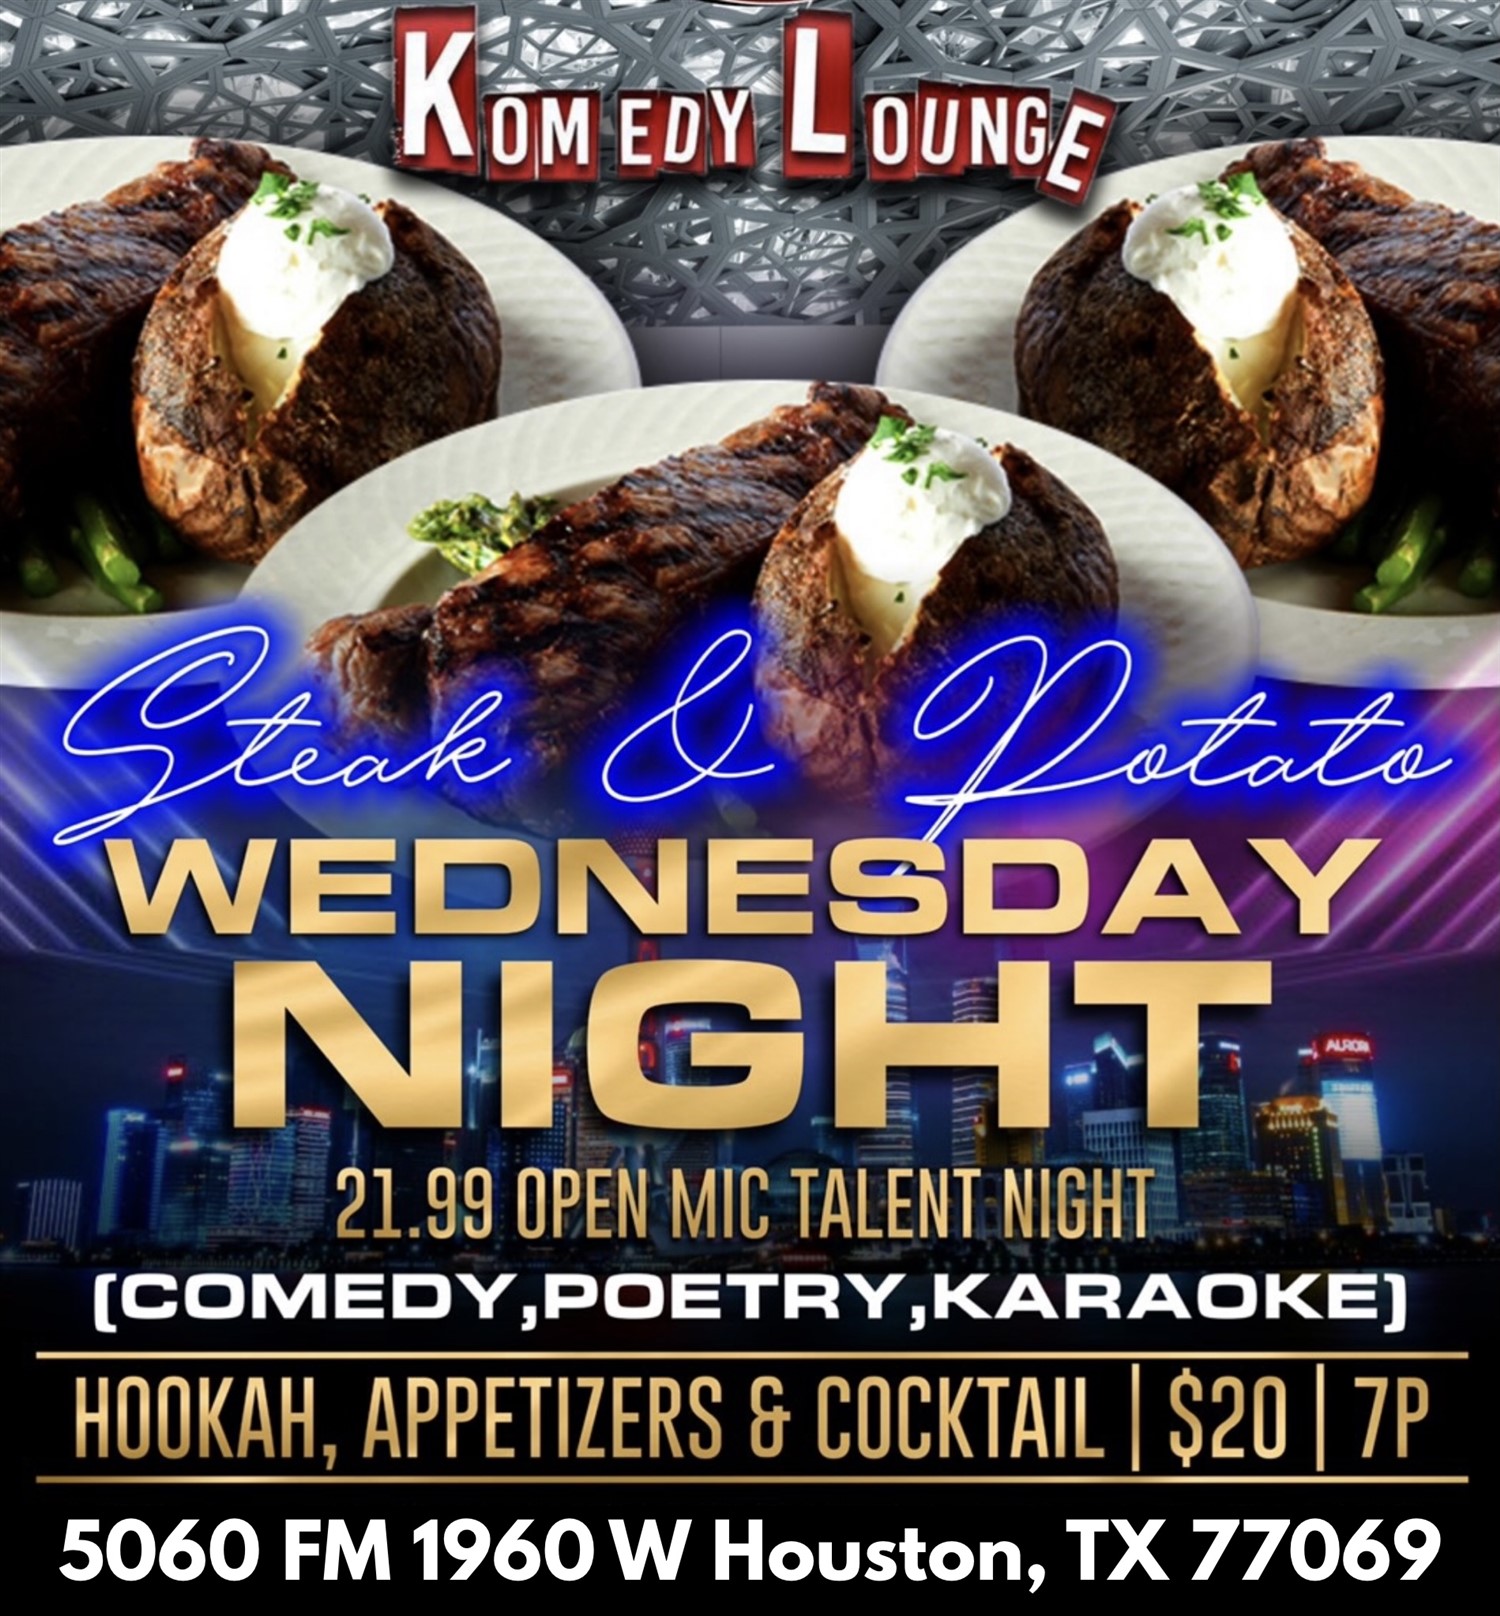 Wednesday Open Mic Talent Night Steak & Potato $21.99 on Sep 02, 00:00@Komedy Lounge - Buy tickets and Get information on komedylounge.com 